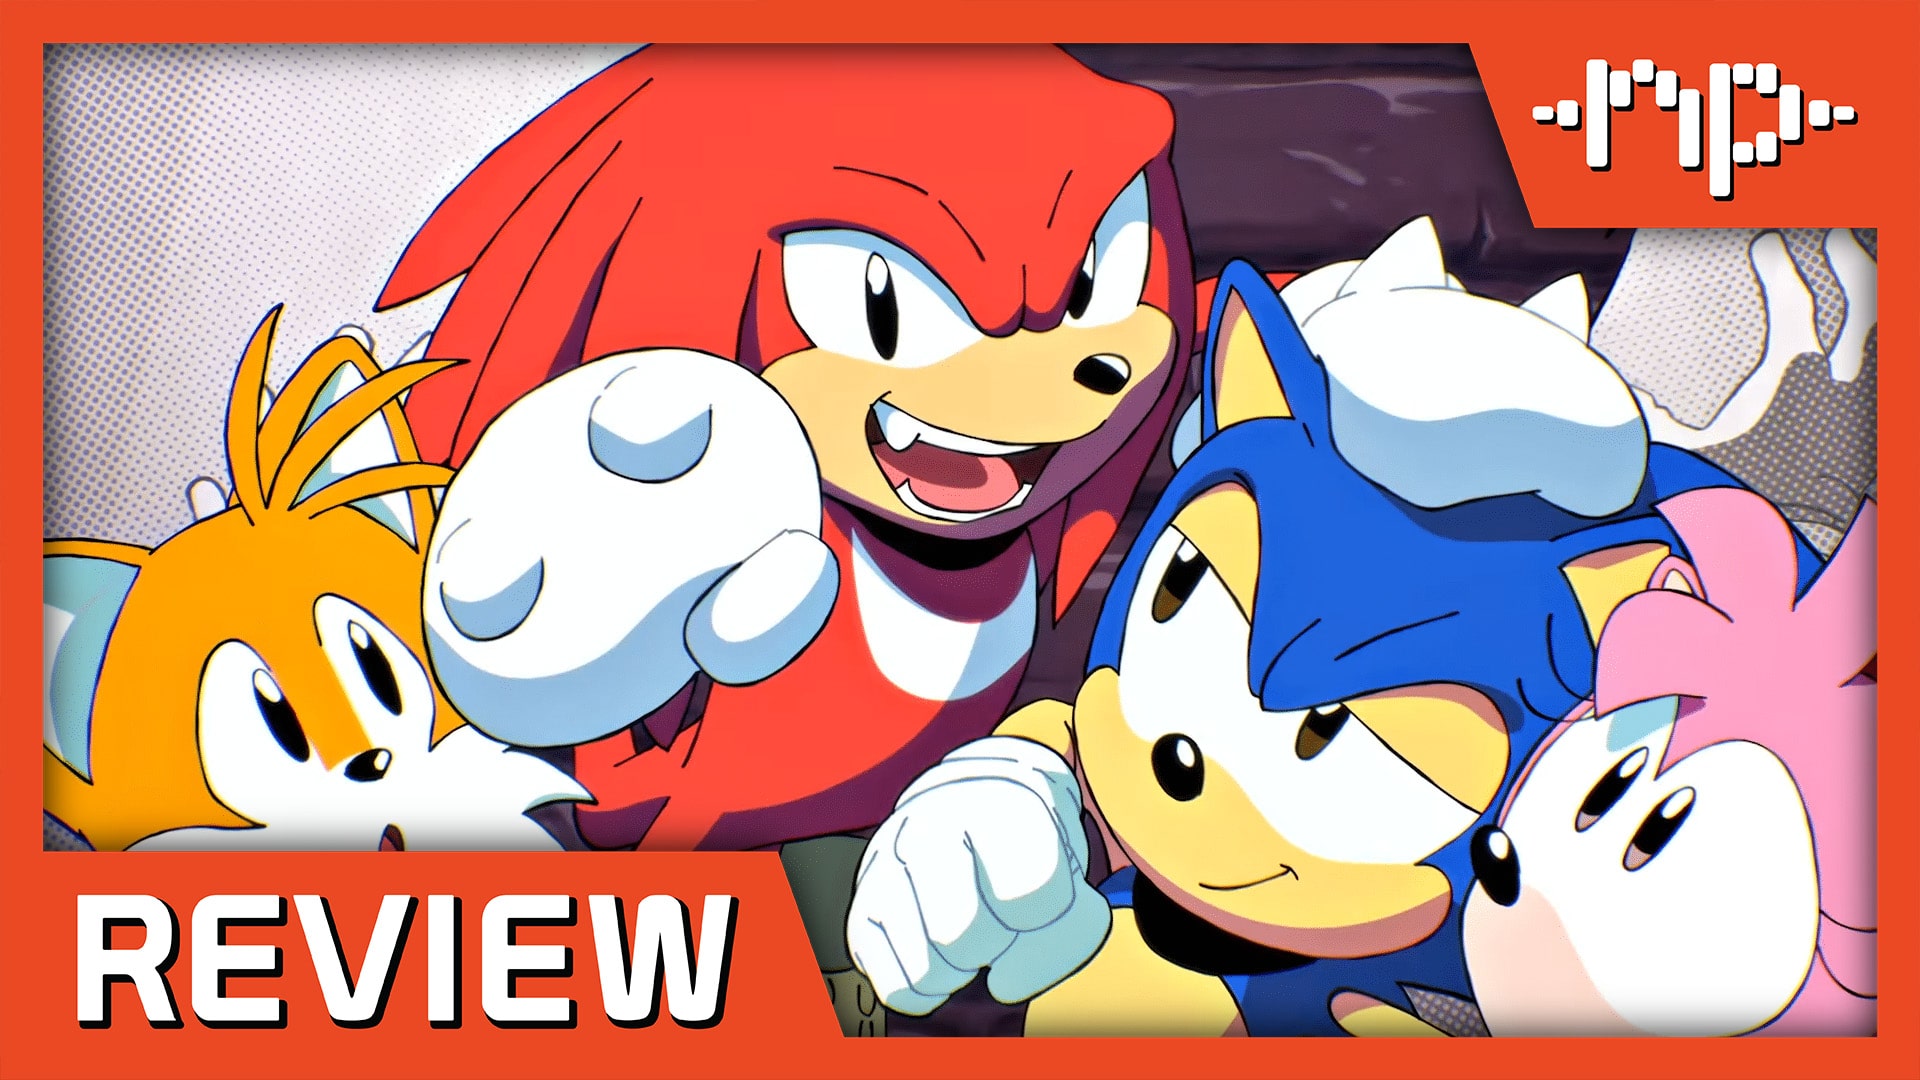 Sonic Origins Review